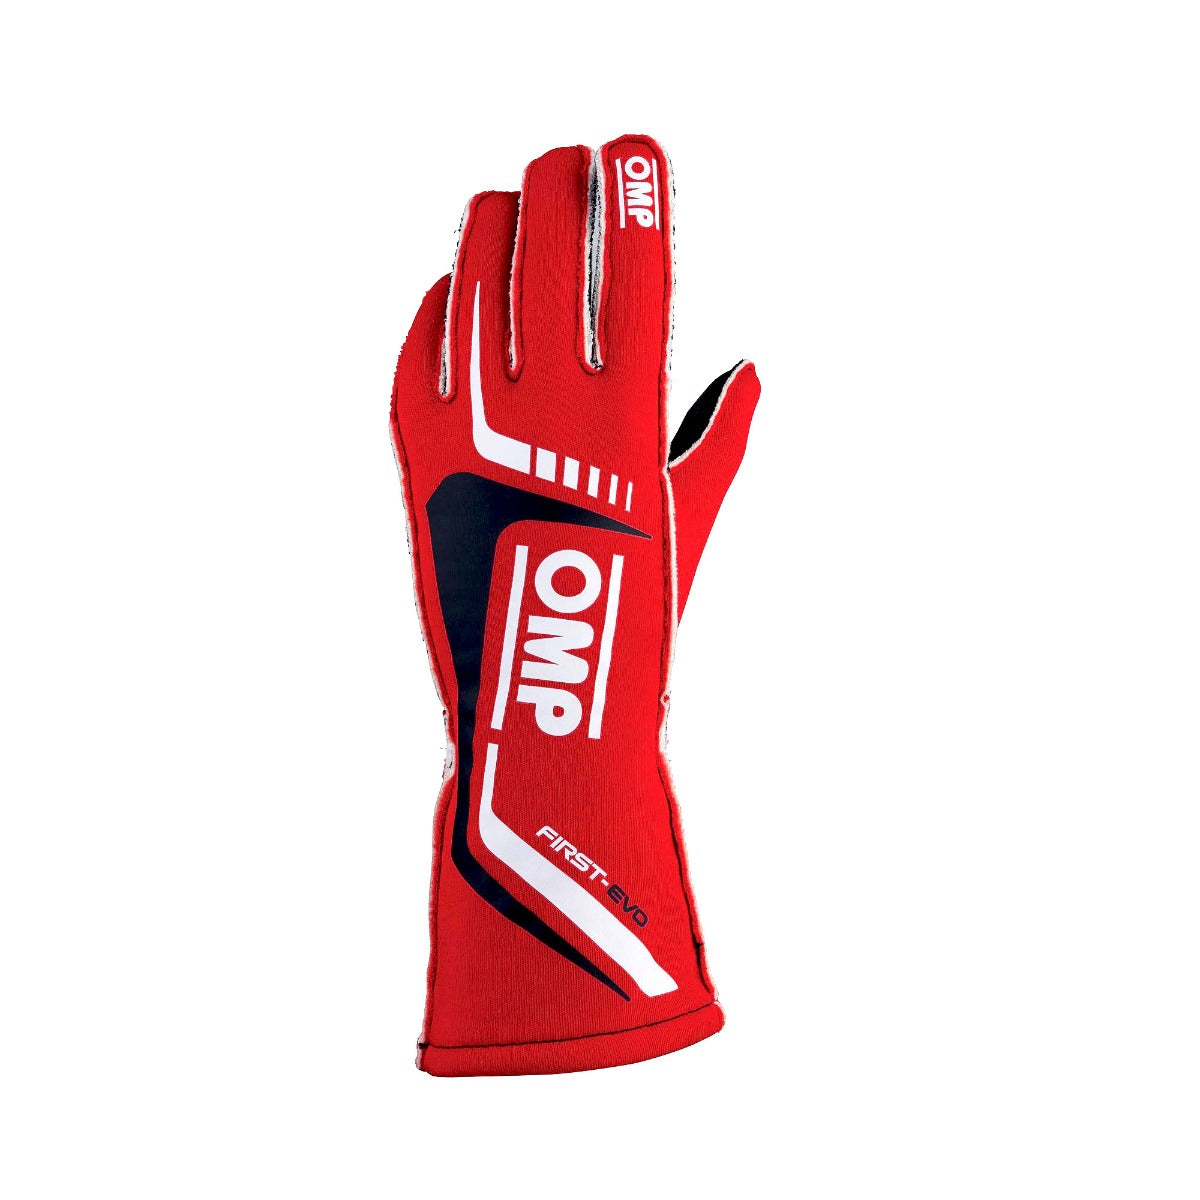 OMP First Evo Nomex Gloves